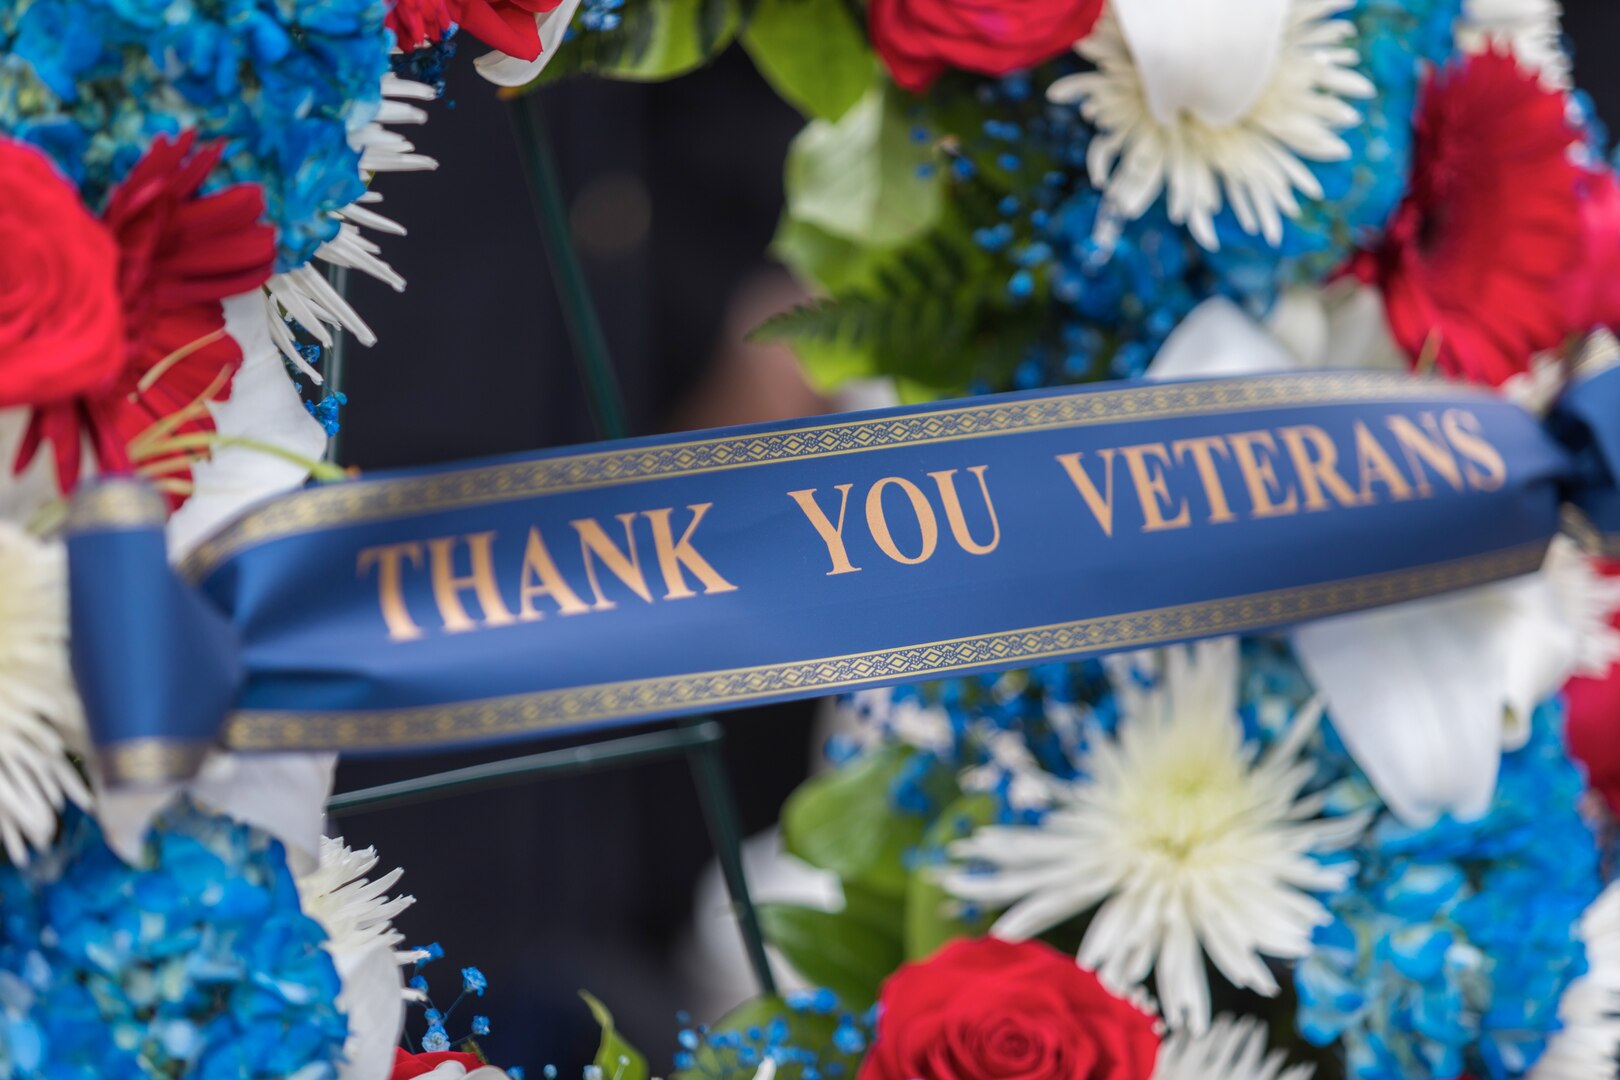 Veterans Day events abound around Military City USA > Washington